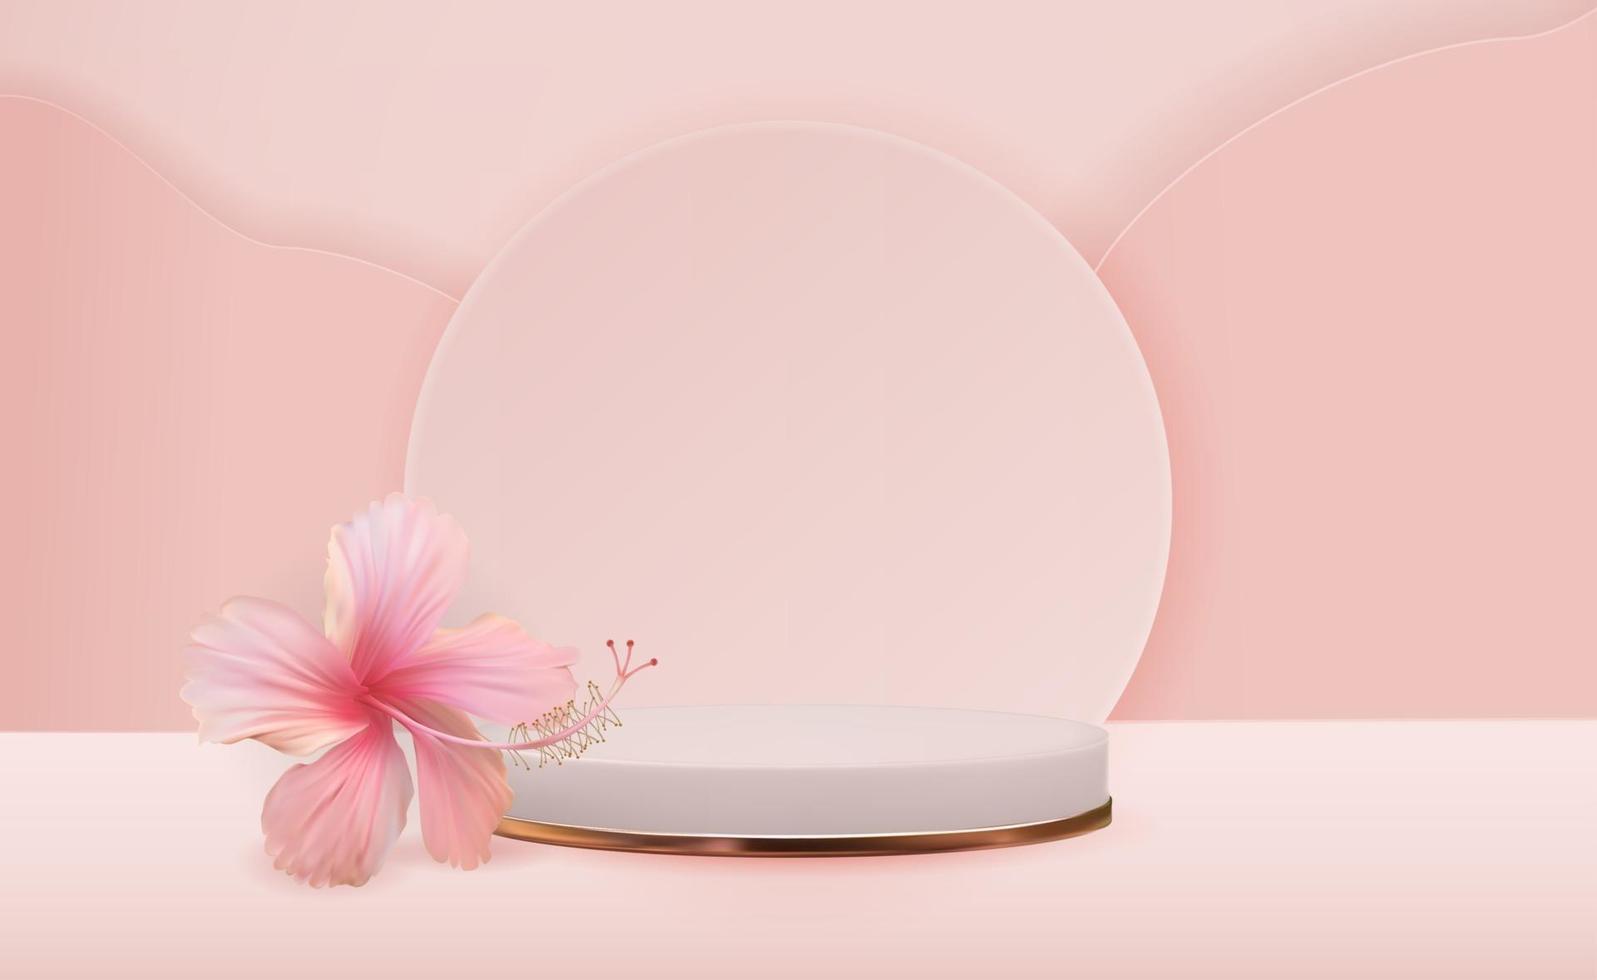 Fondo de pedestal blanco 3d con flor de hibisco para presentación de productos cosméticos revista de moda vector